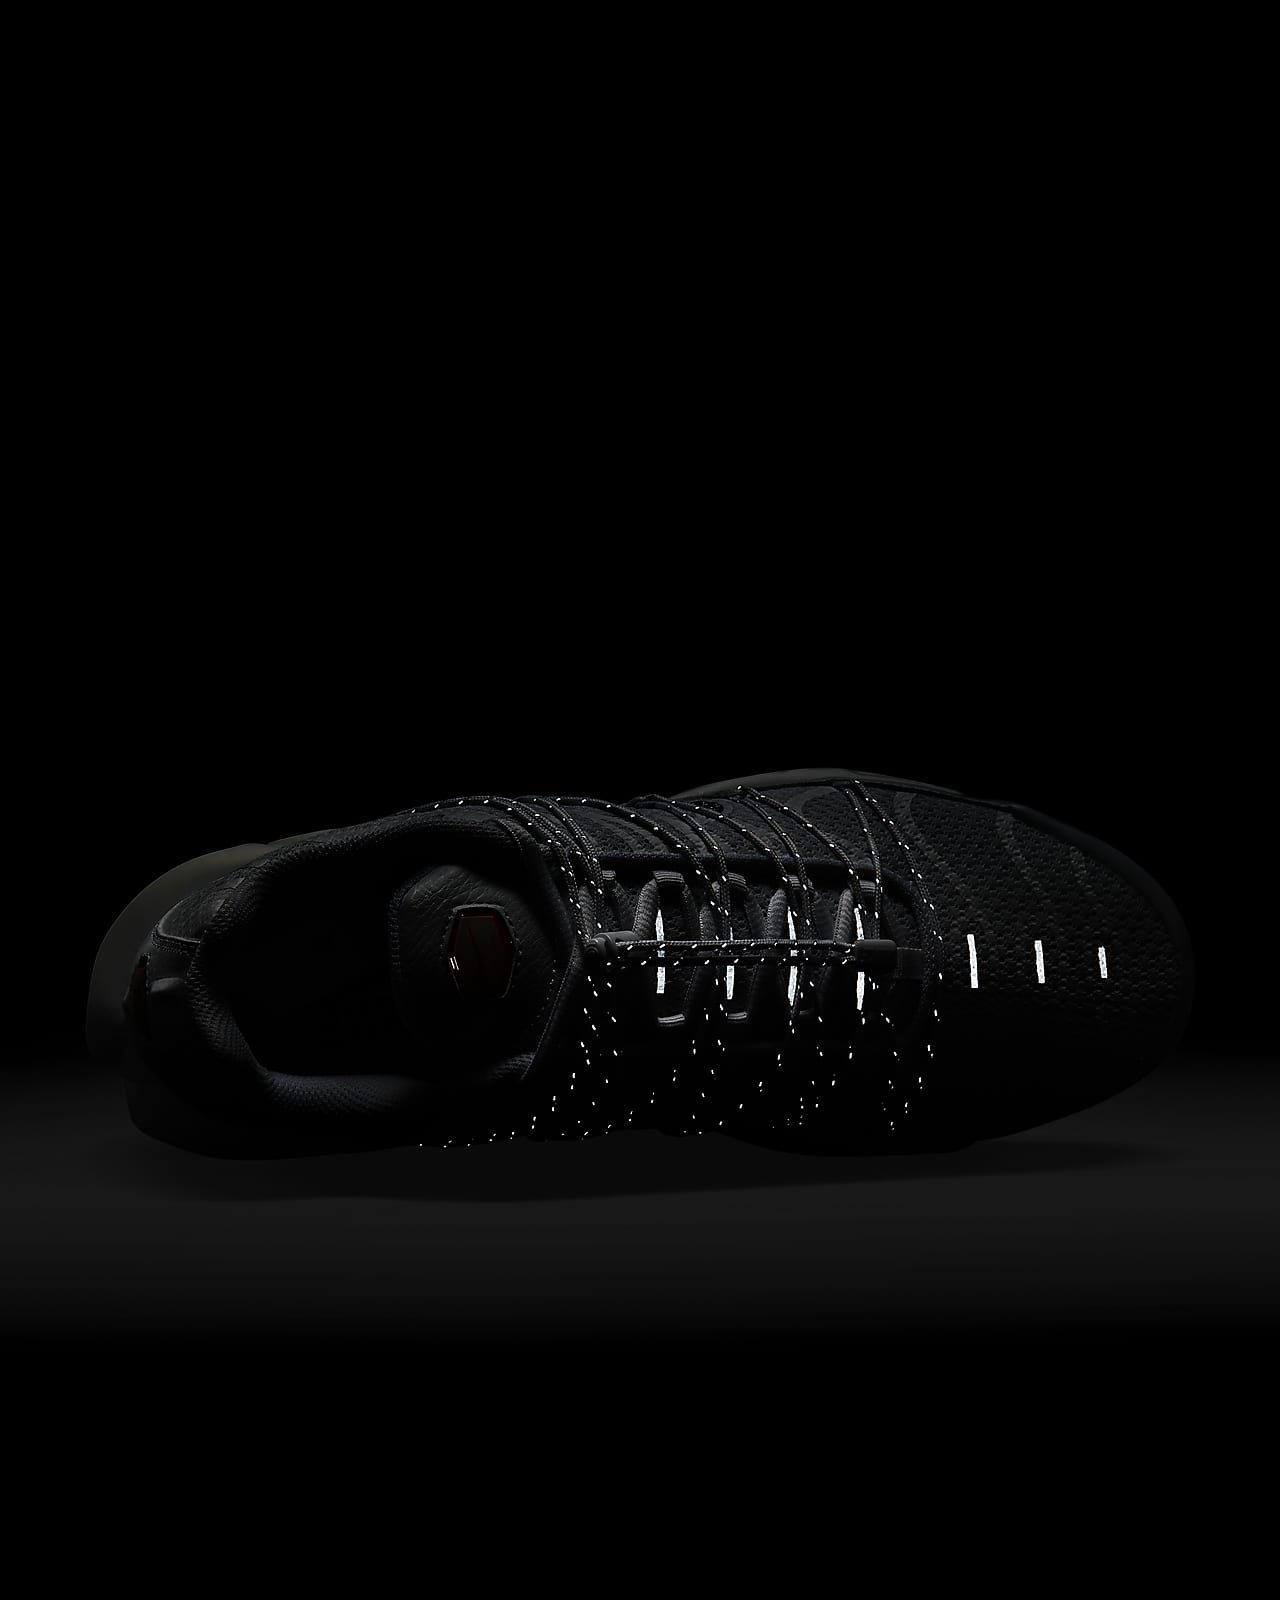 Chaussure Nike Air Max Plus Utility pour homme